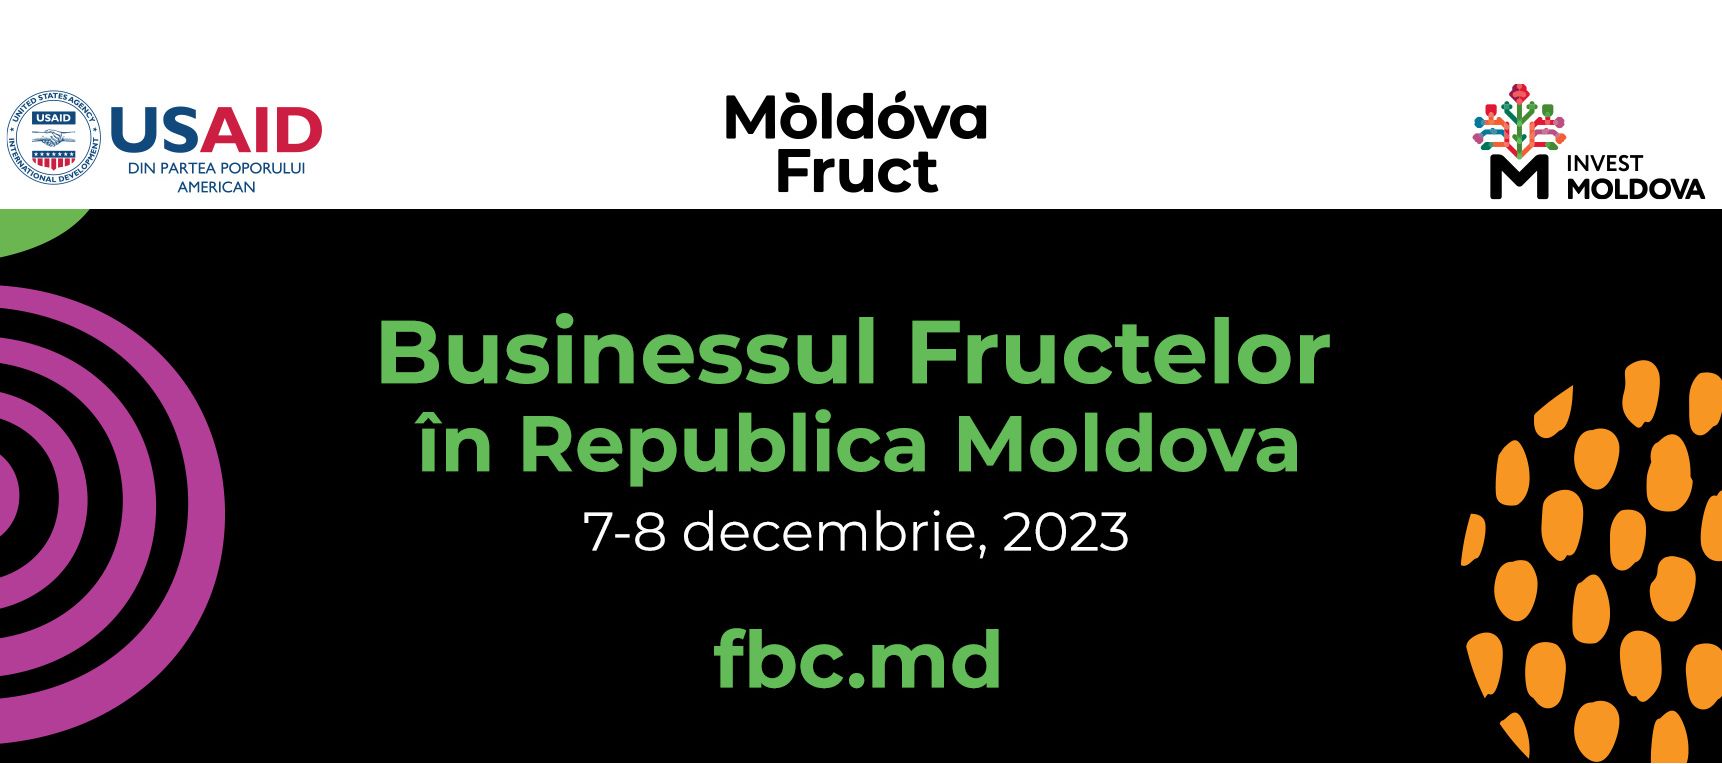 bussinesul fructelor în Republica Moldova - agroexpert.md